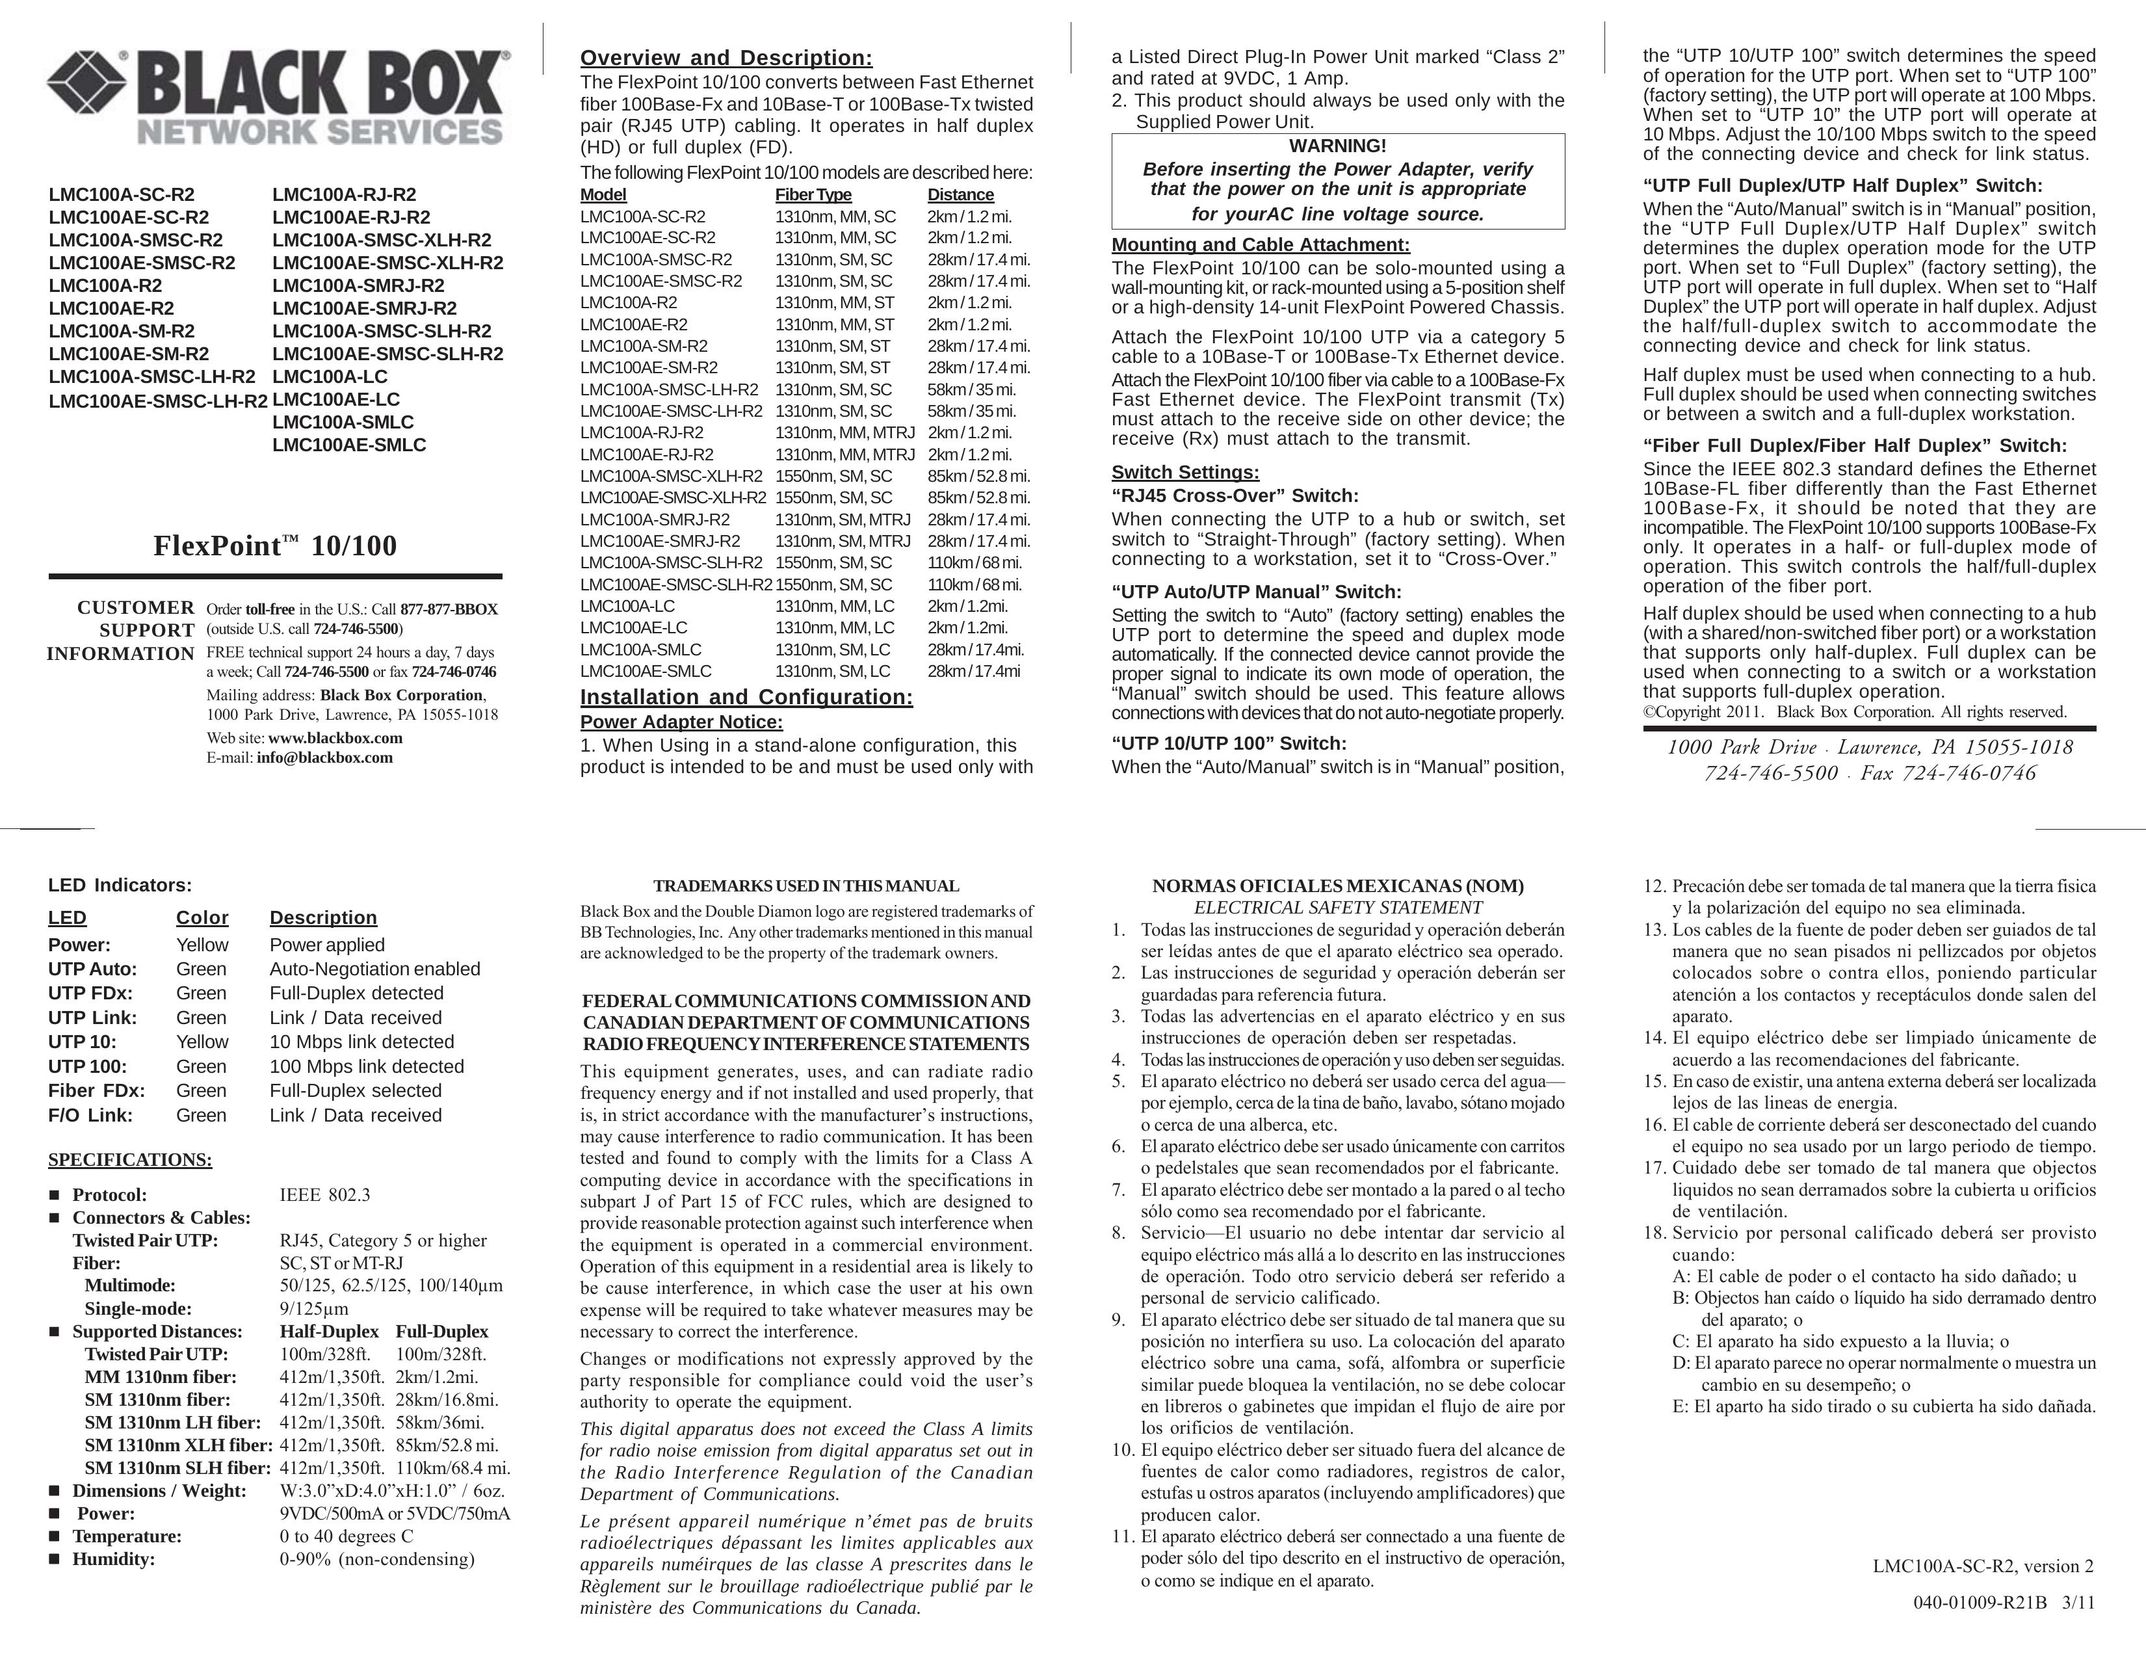 Black Box LMC100AE-R2 Network Cables User Manual